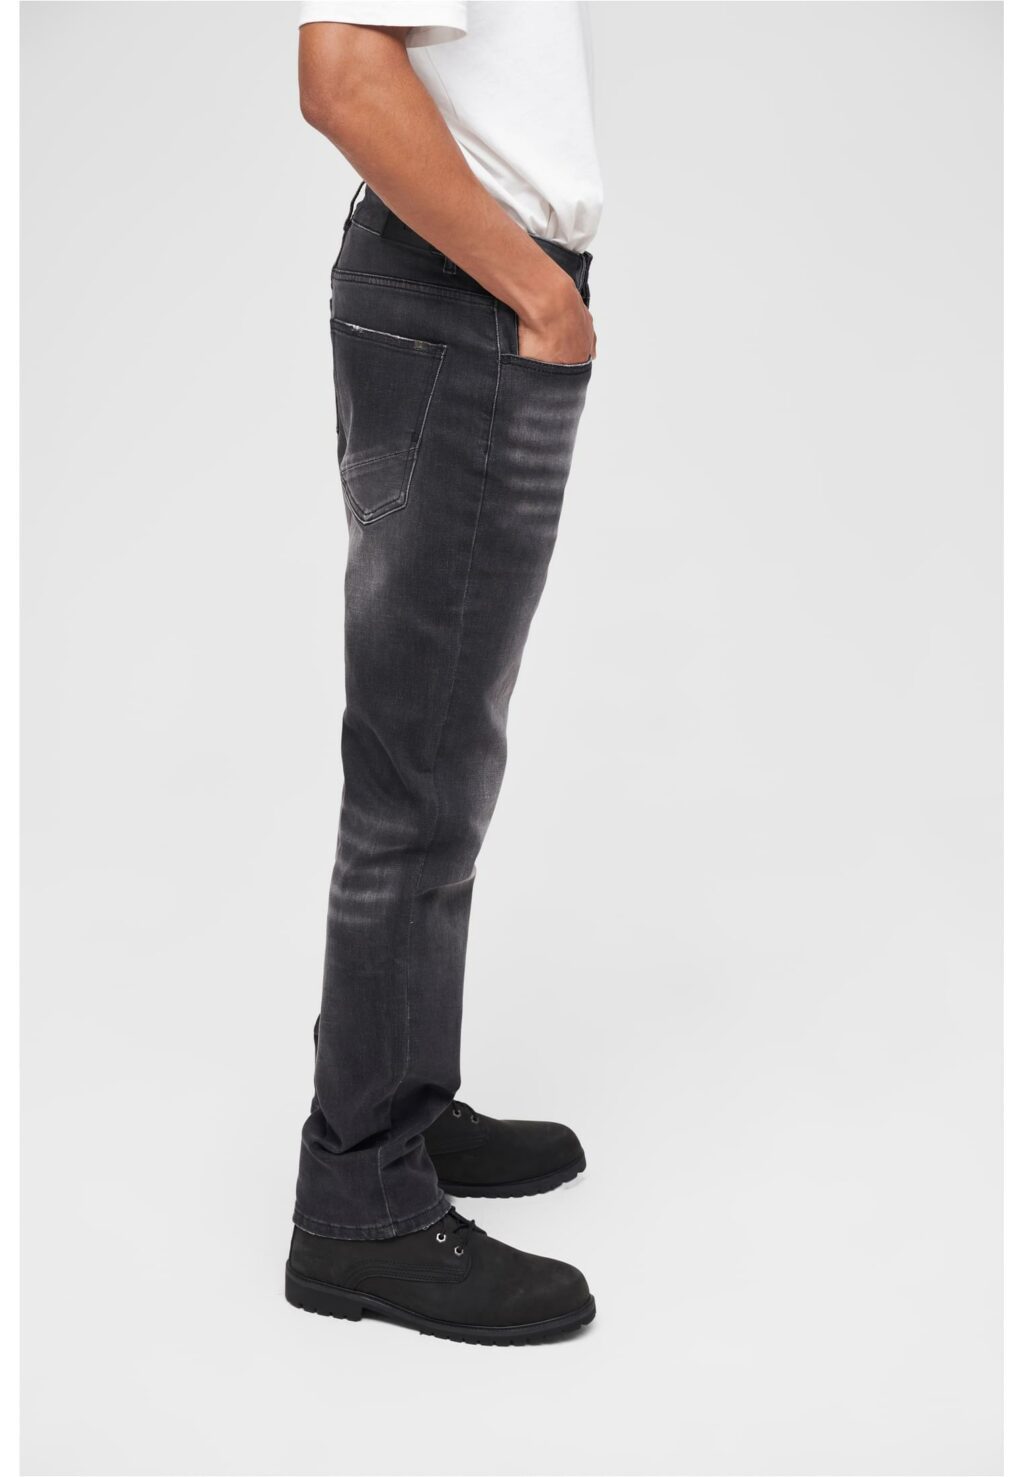 Brandit Rover Denim Jeans black BD1017